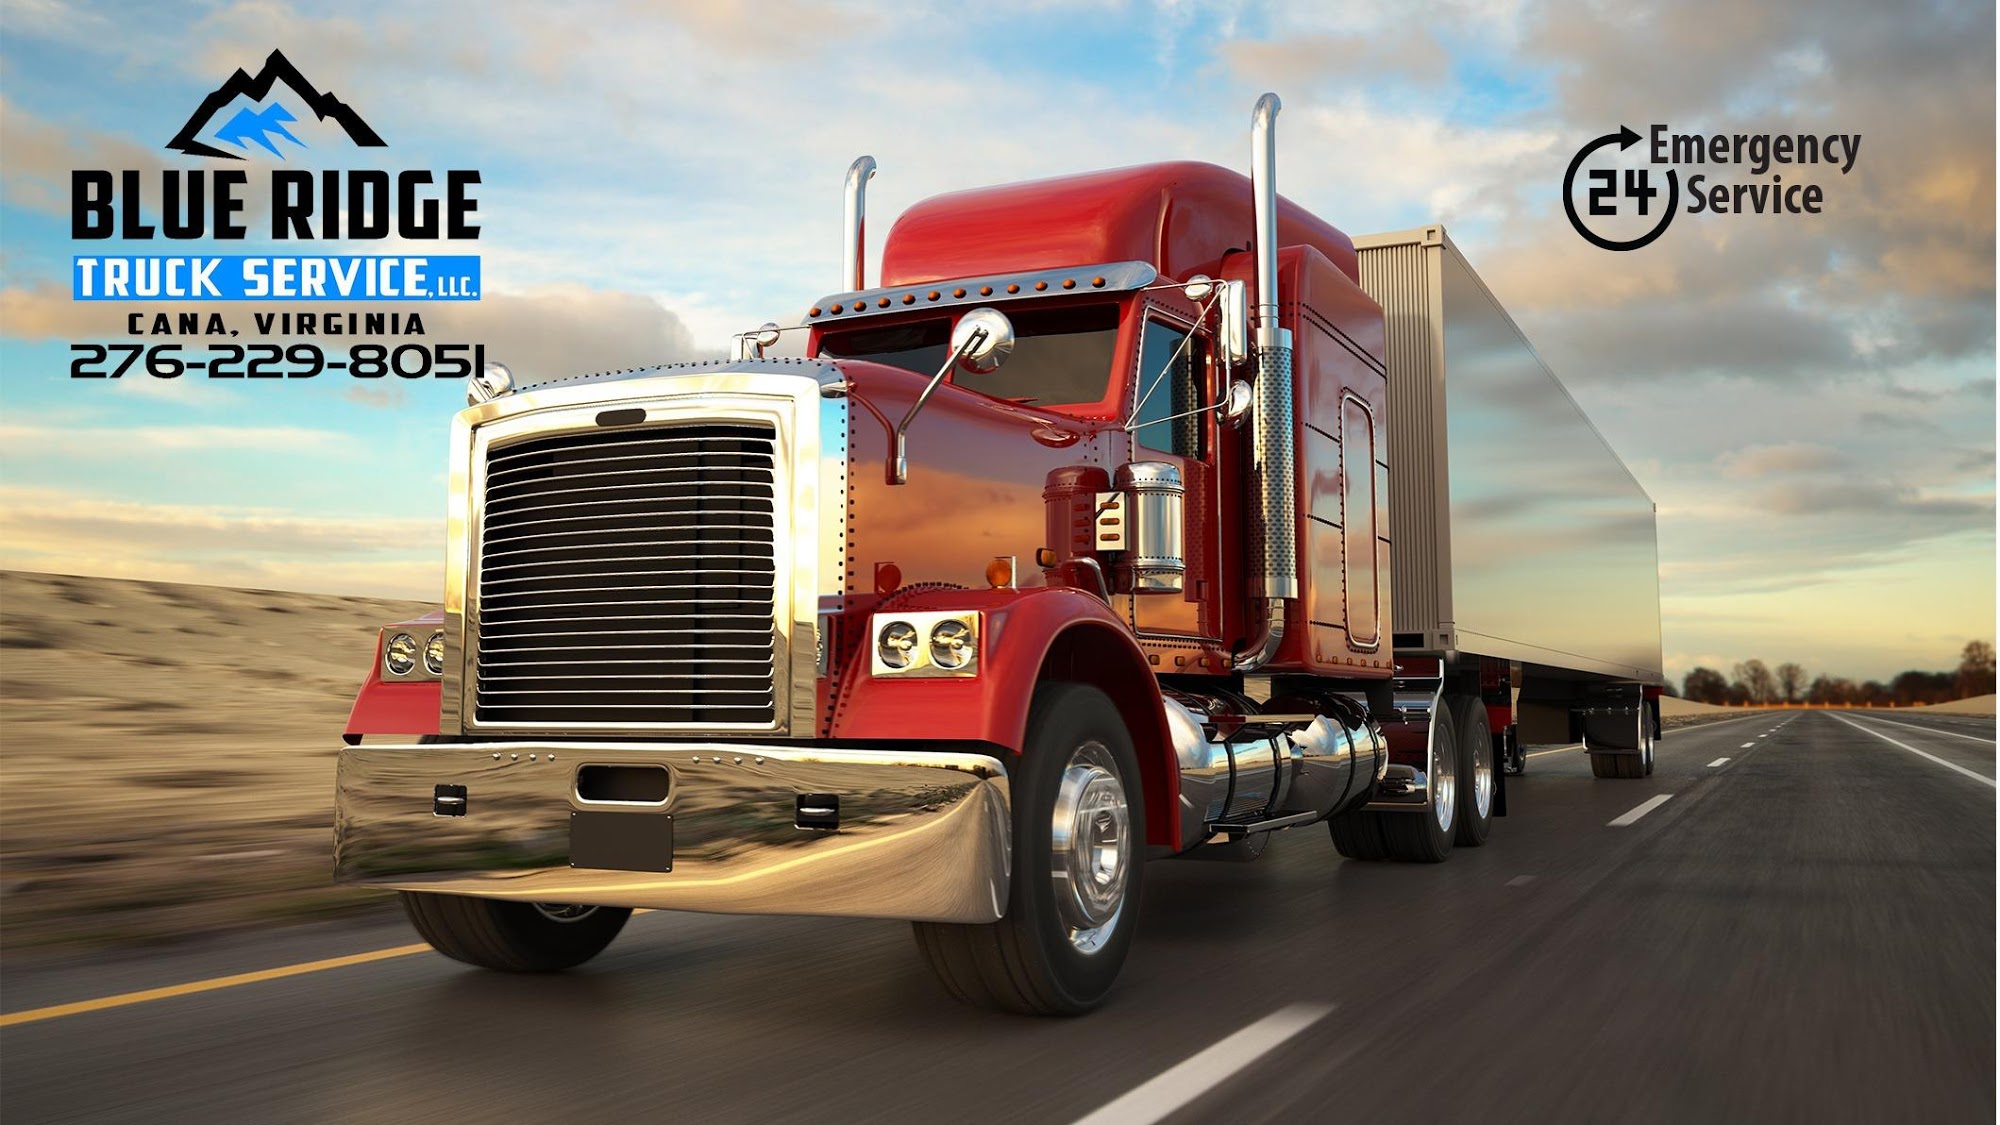 Blue Ridge Truck Service, LLC